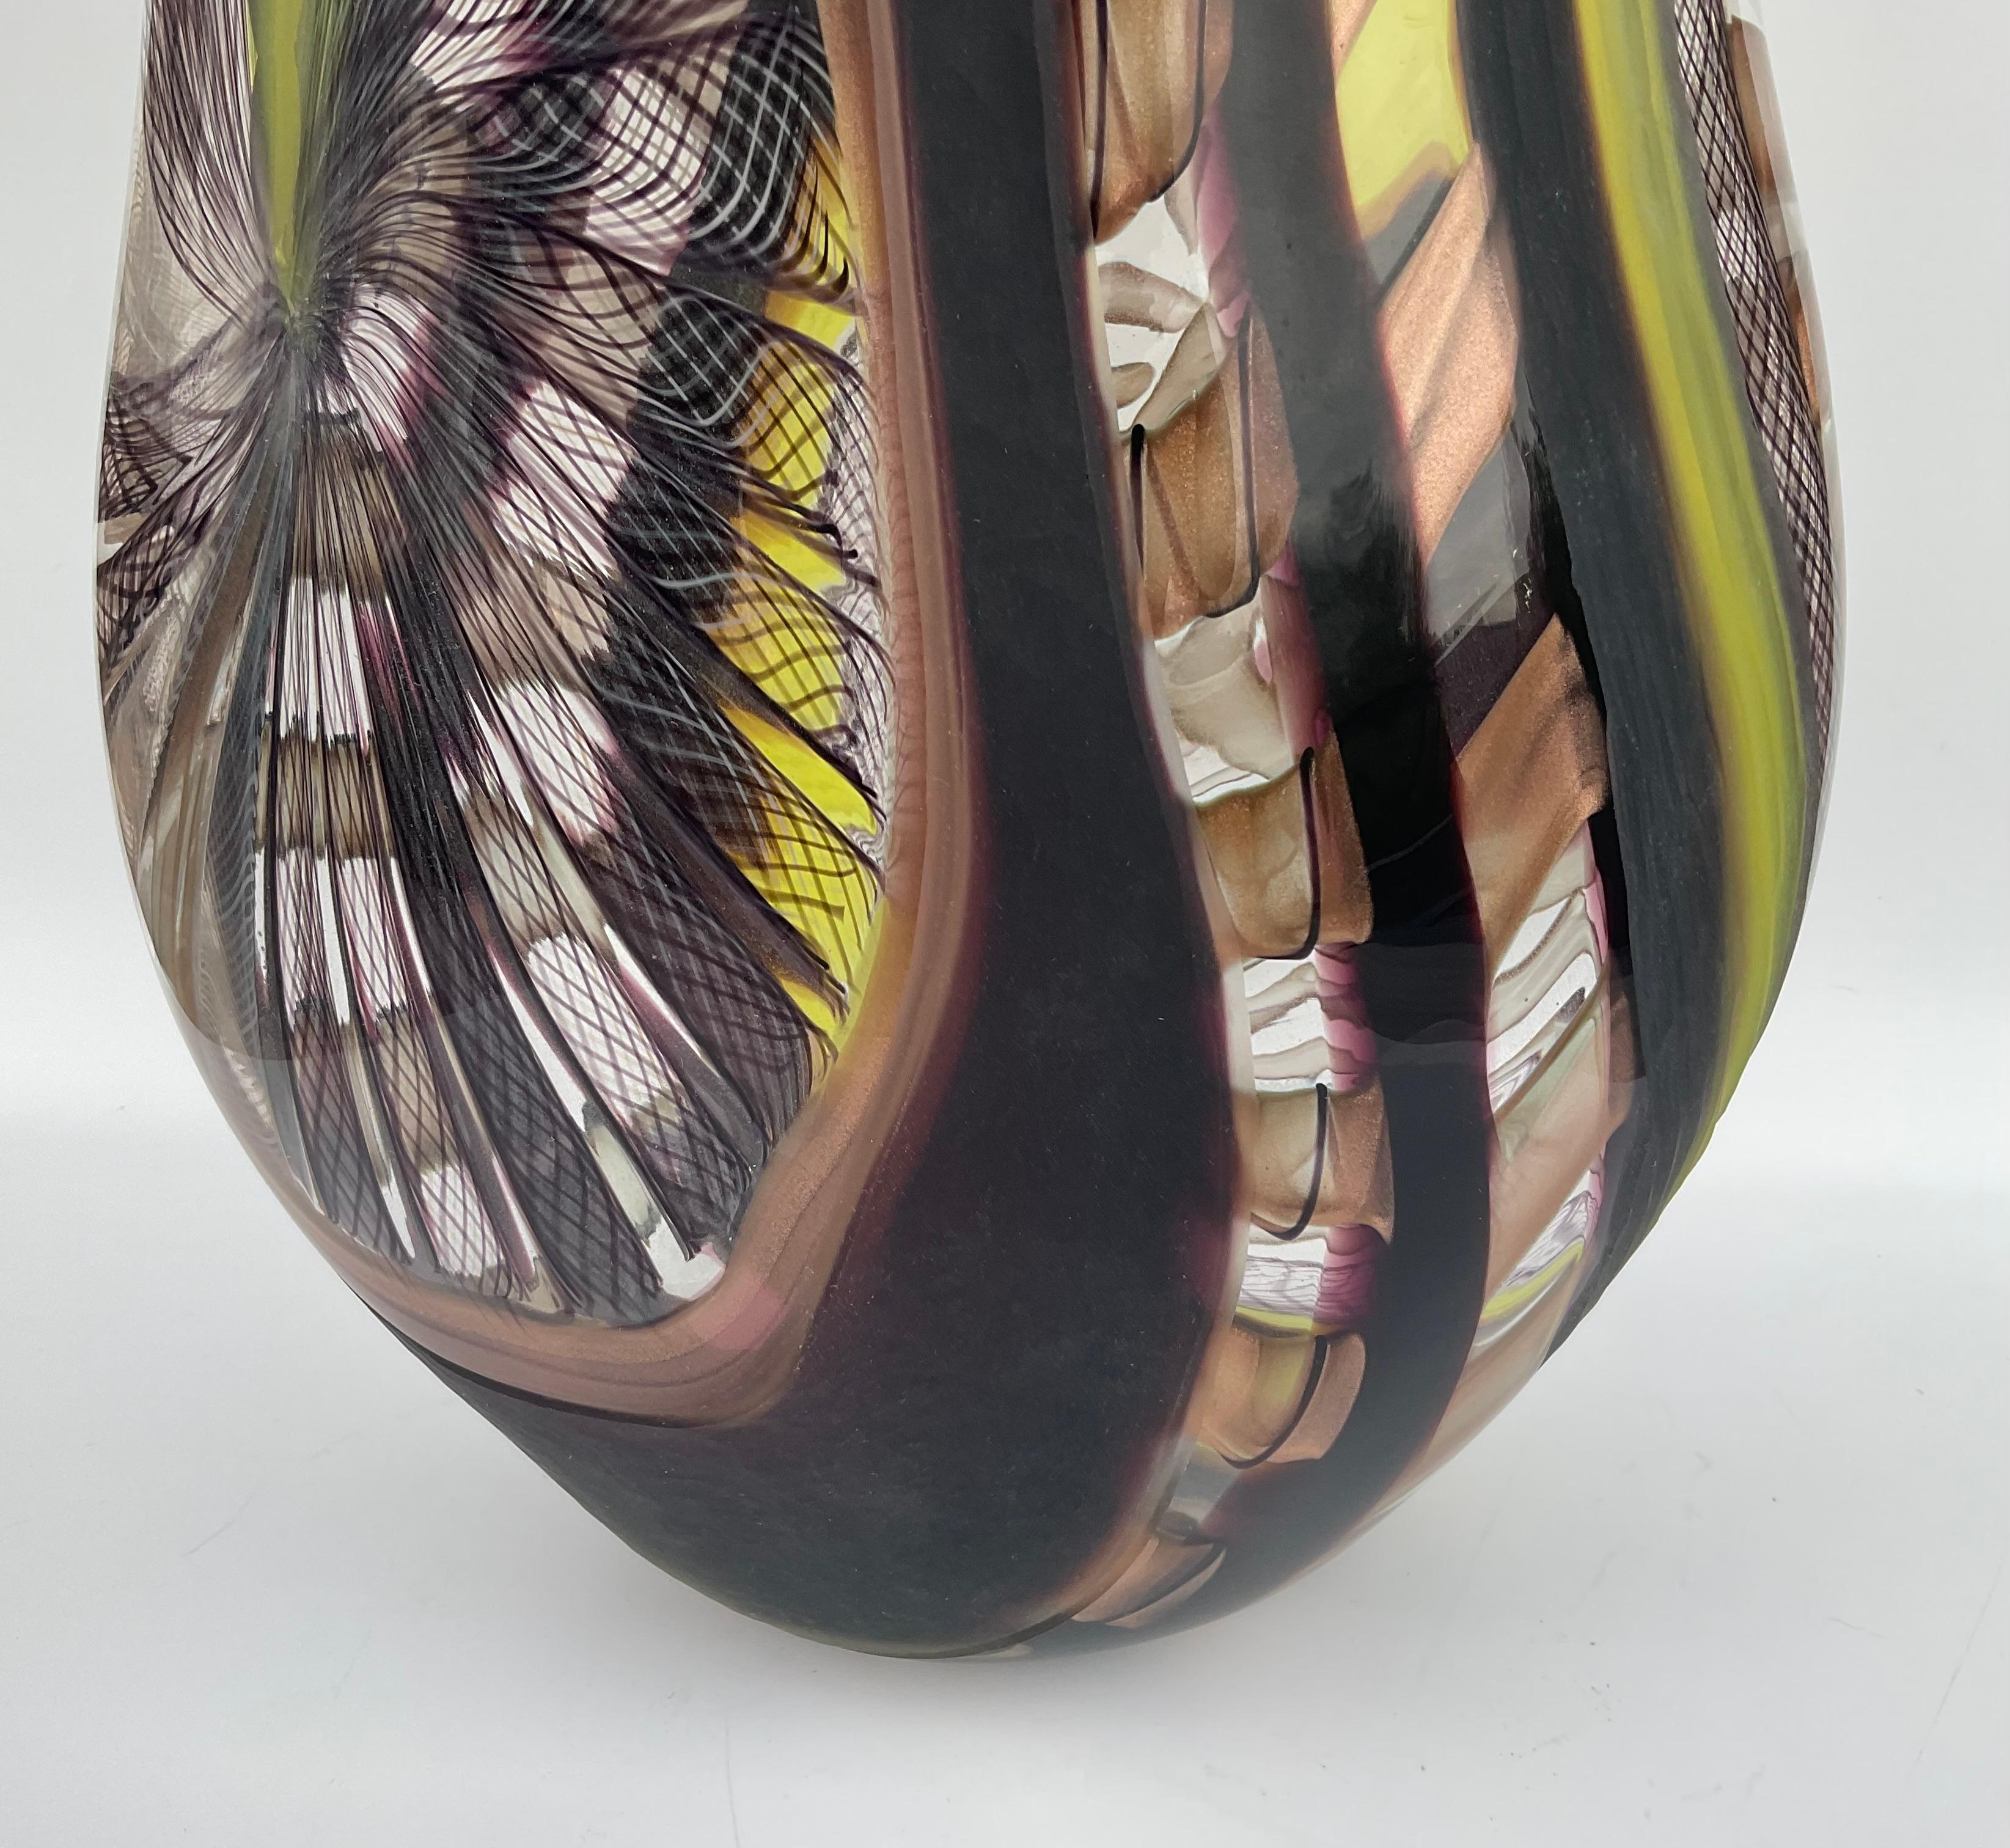 Late 20th Century Signoretti Murano Art Glass Vase with Pinwheels and Battuto Work Signed 1 of 1